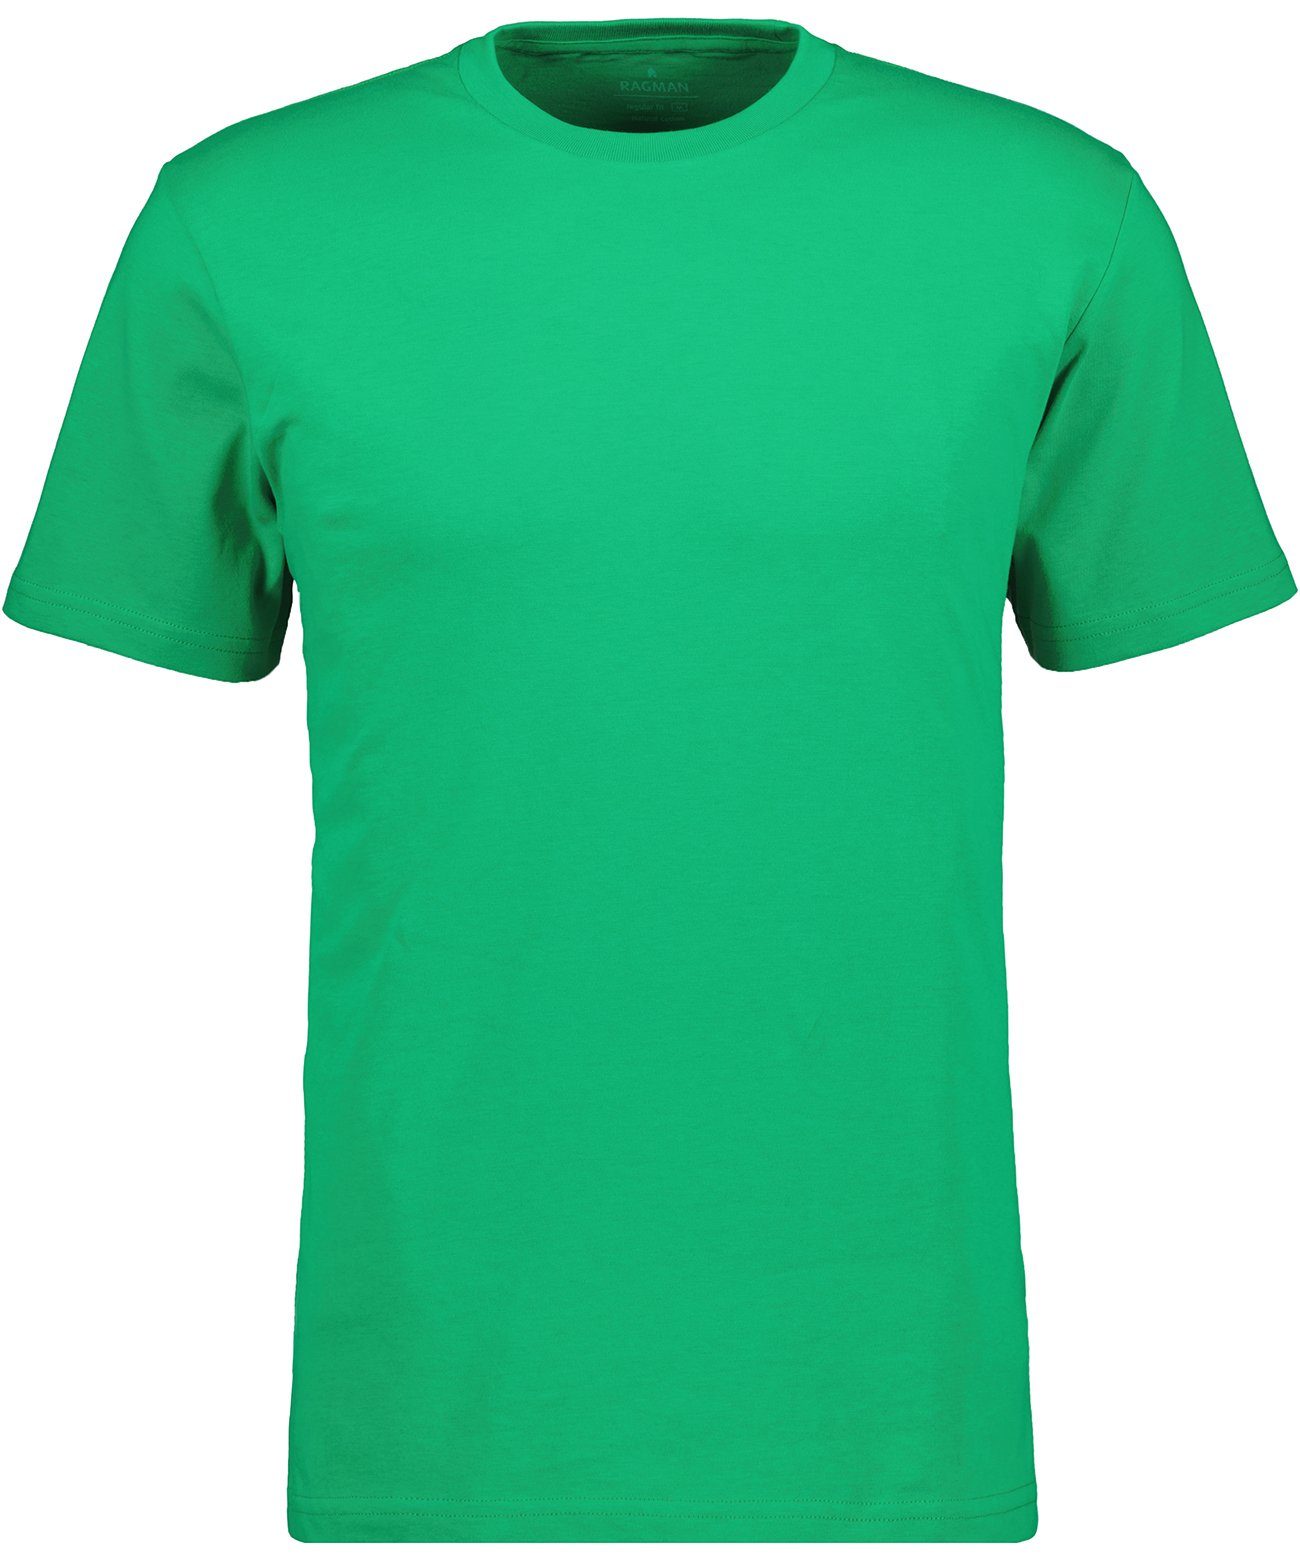 RAGMAN T-Shirt Green-394 Electric